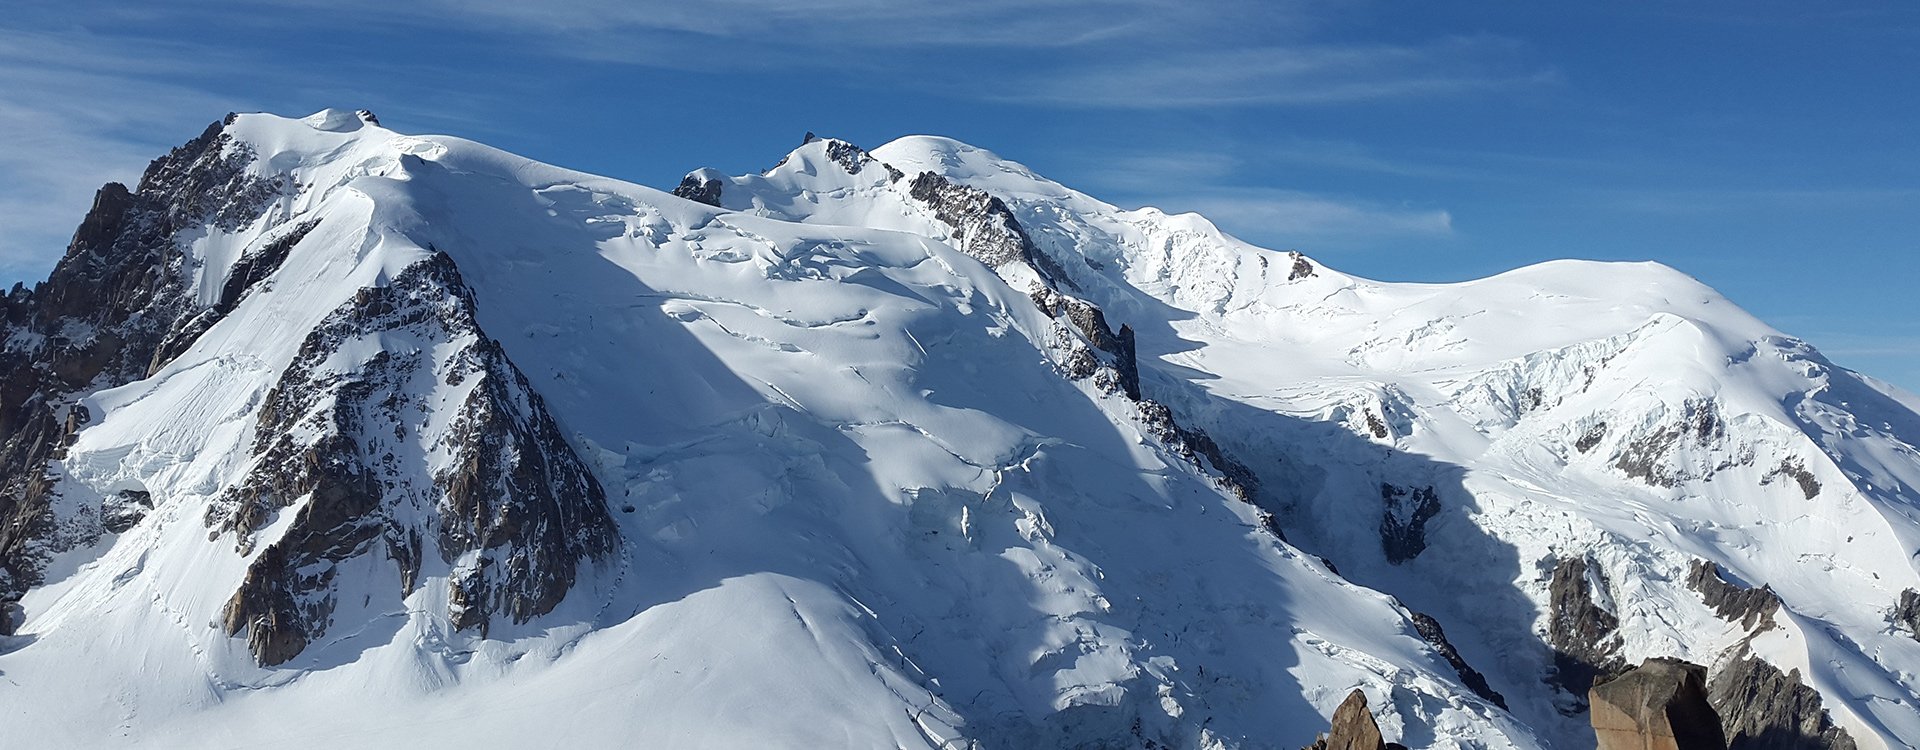 Chamonix_Mont Blanc